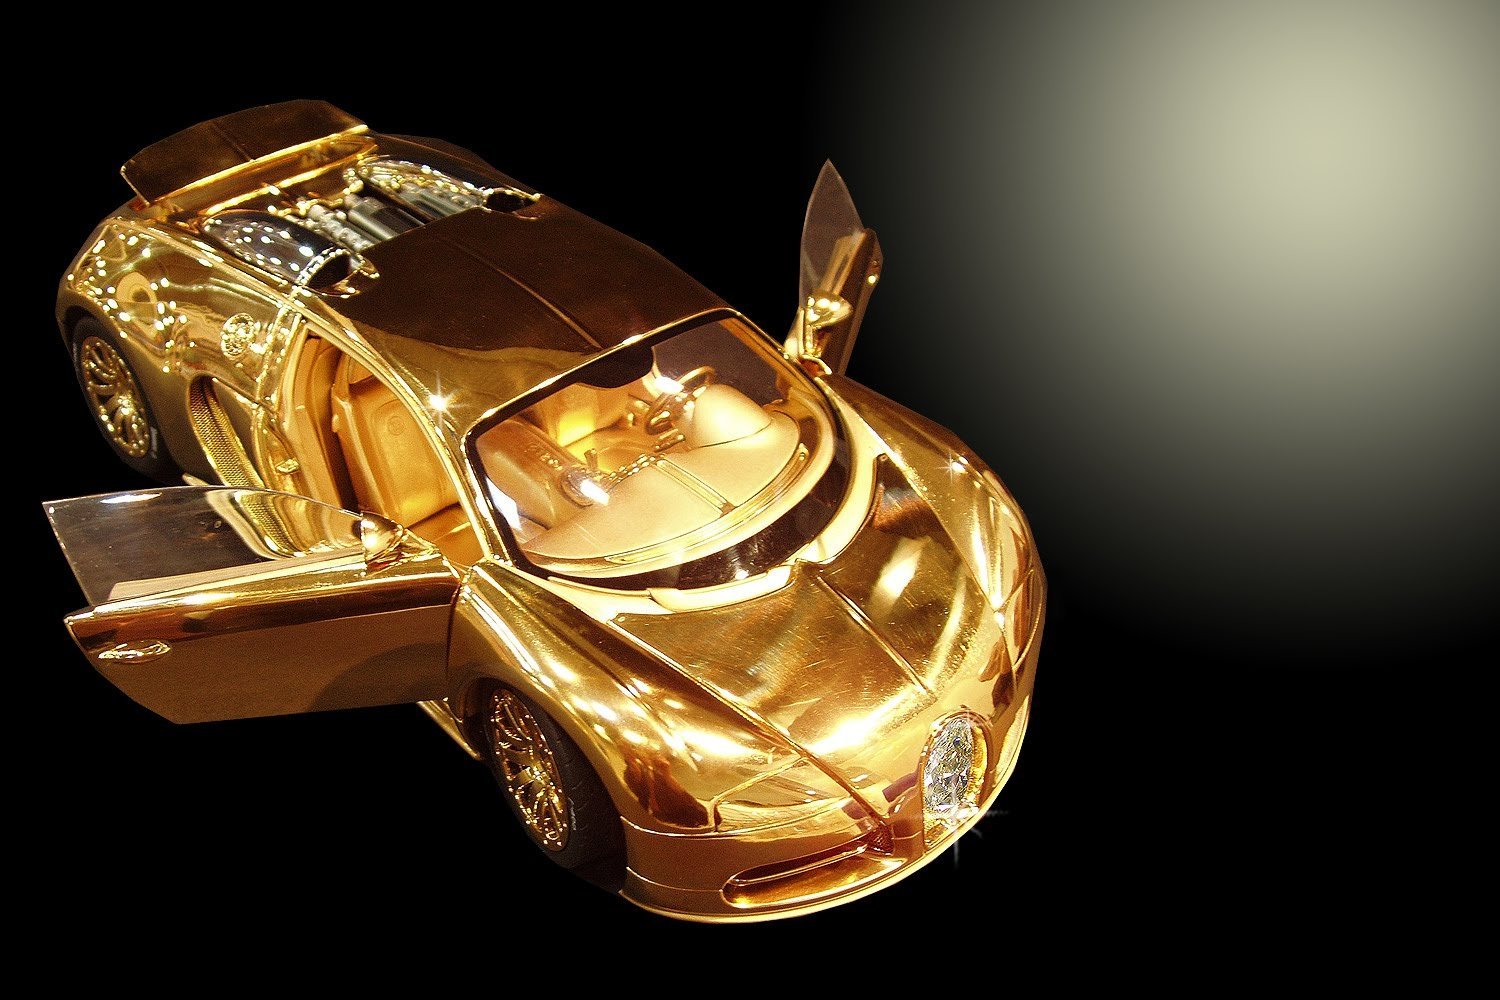 Expensive gold. Золотая Бугатти. Автомобиль Bugatti Veyron Diamond Ltd золото. Бугатти Вейрон золотой. Золотой машинка игрушка Бугатти.